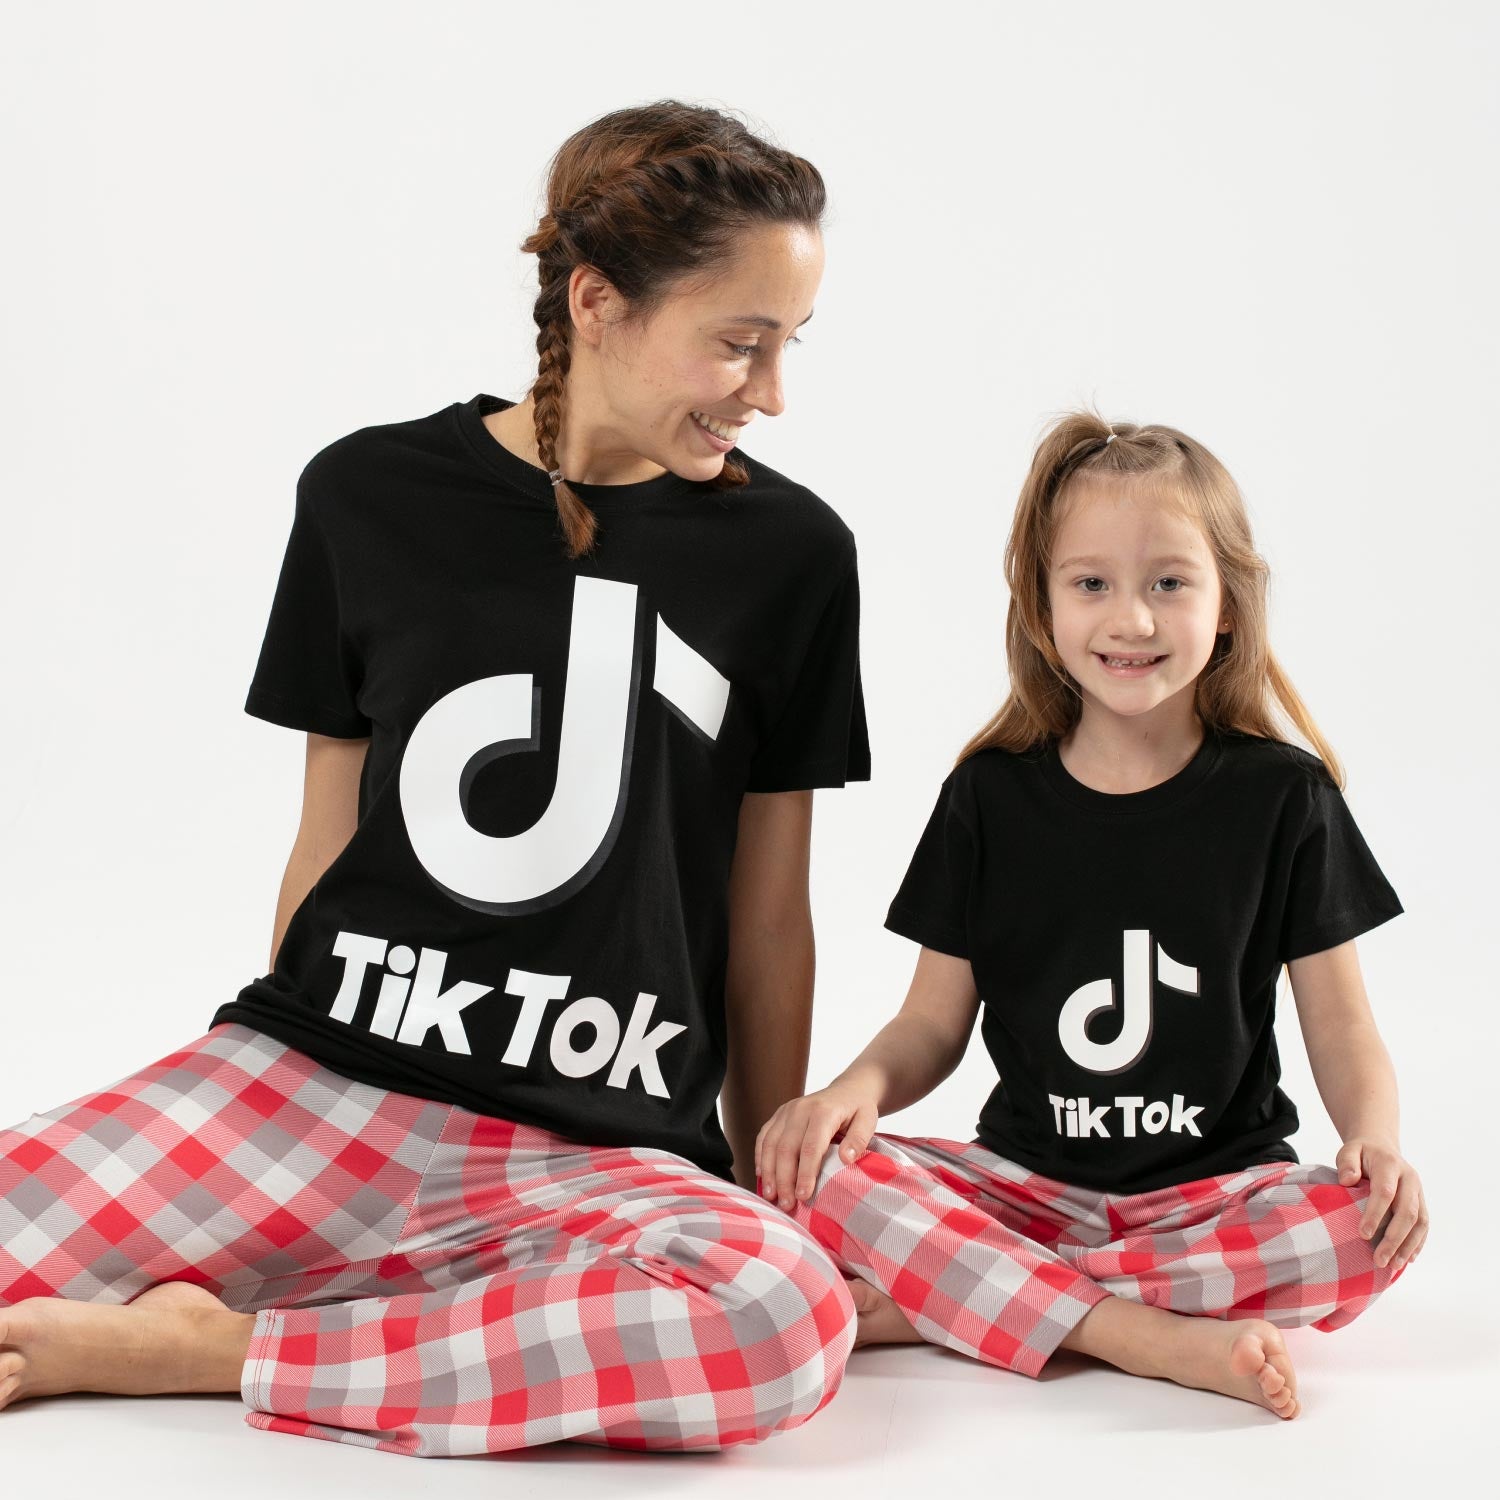 Tik tok pajamas black t -shirt and red pants